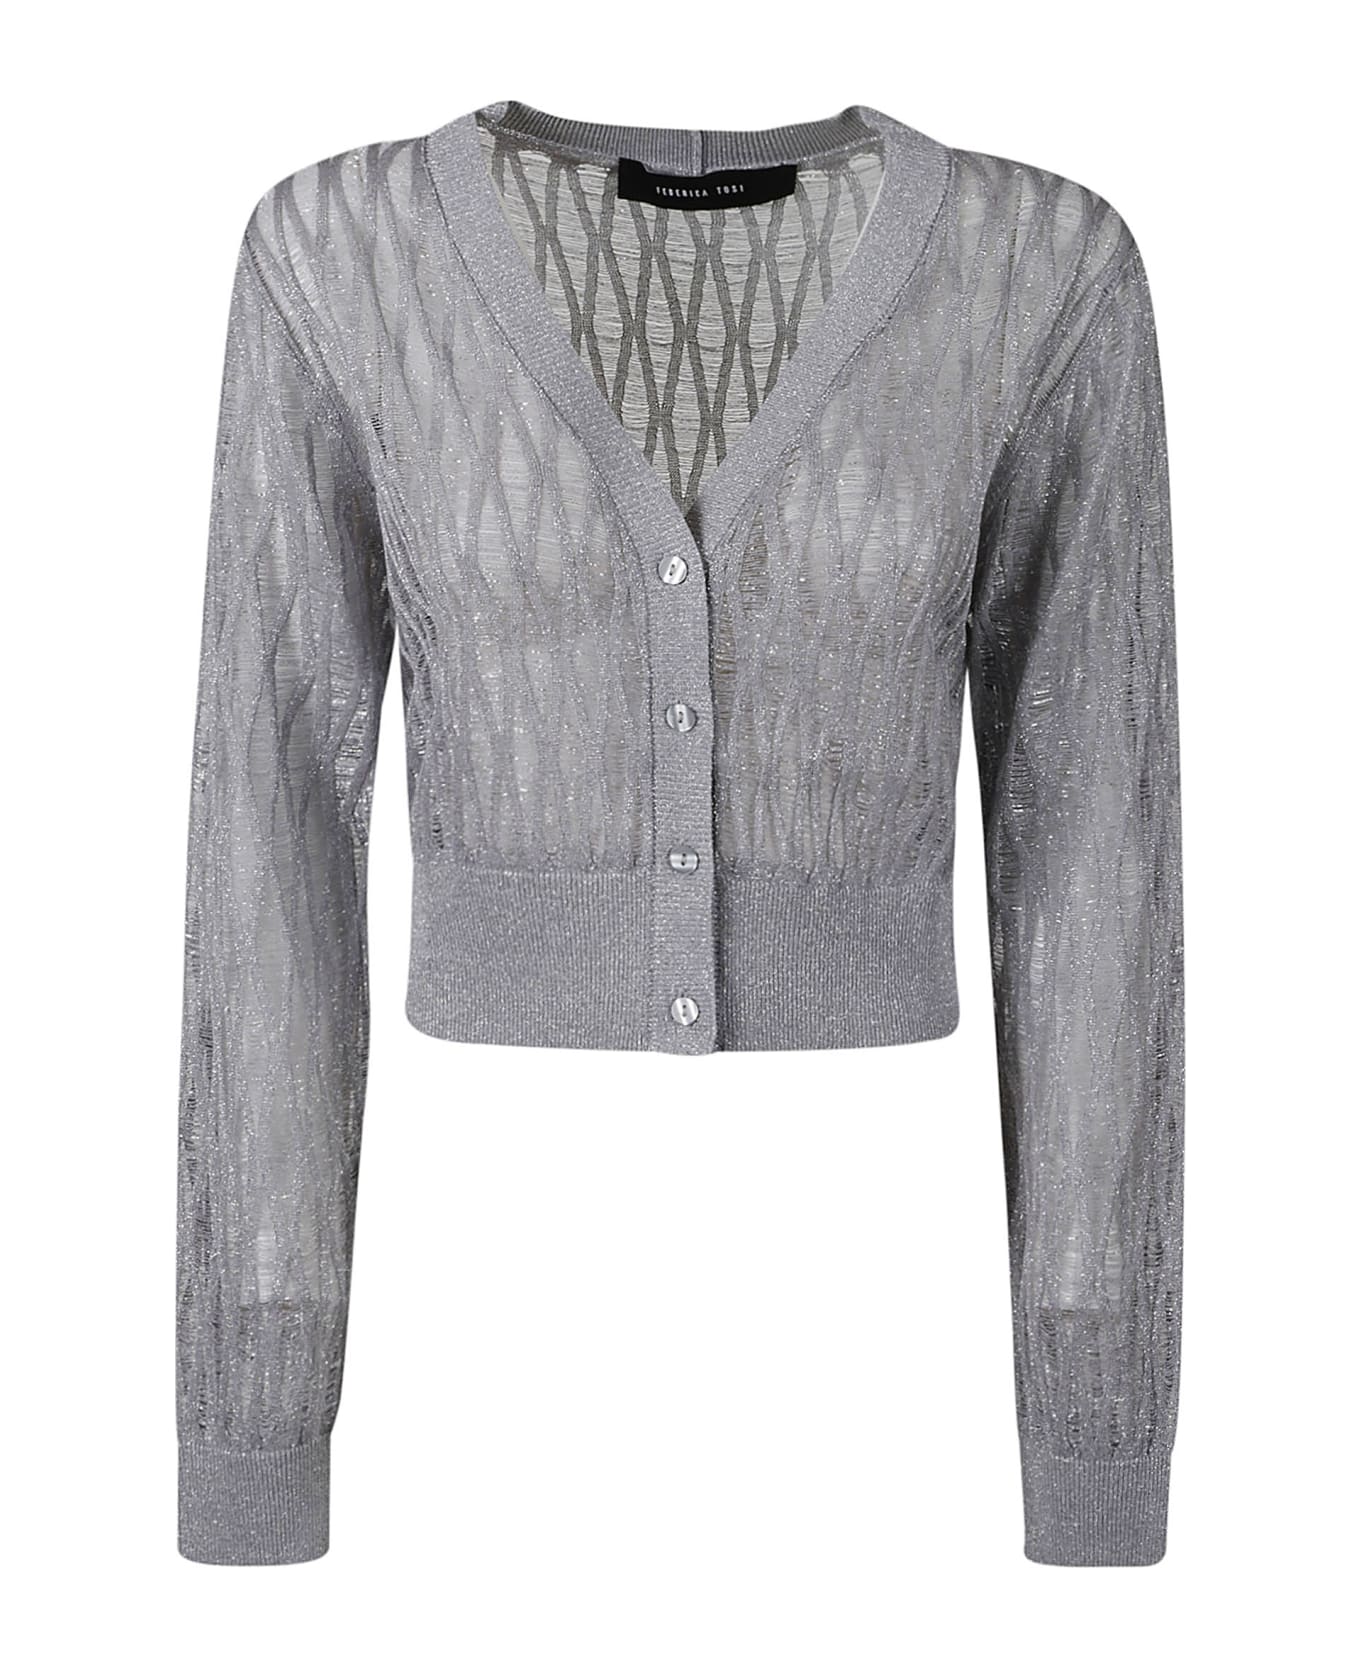 Federica Tosi See-through Diamond Pattern Cropped Cardigan - Silver